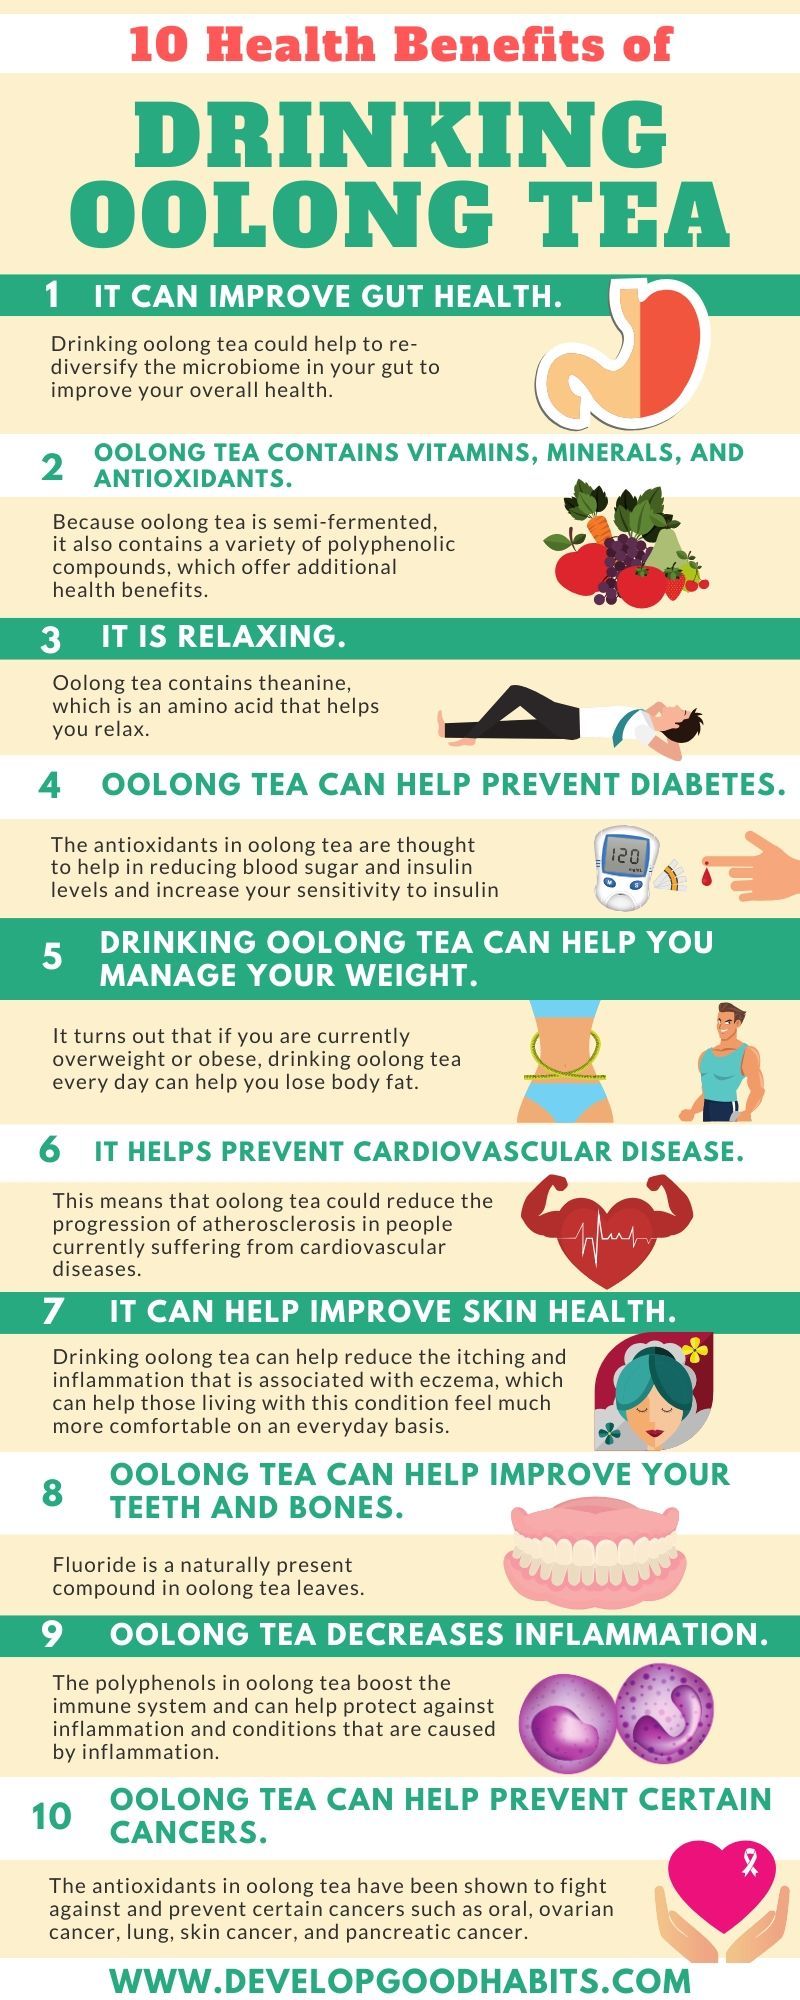 10 Health Benefits of Drinking Oolong Tea